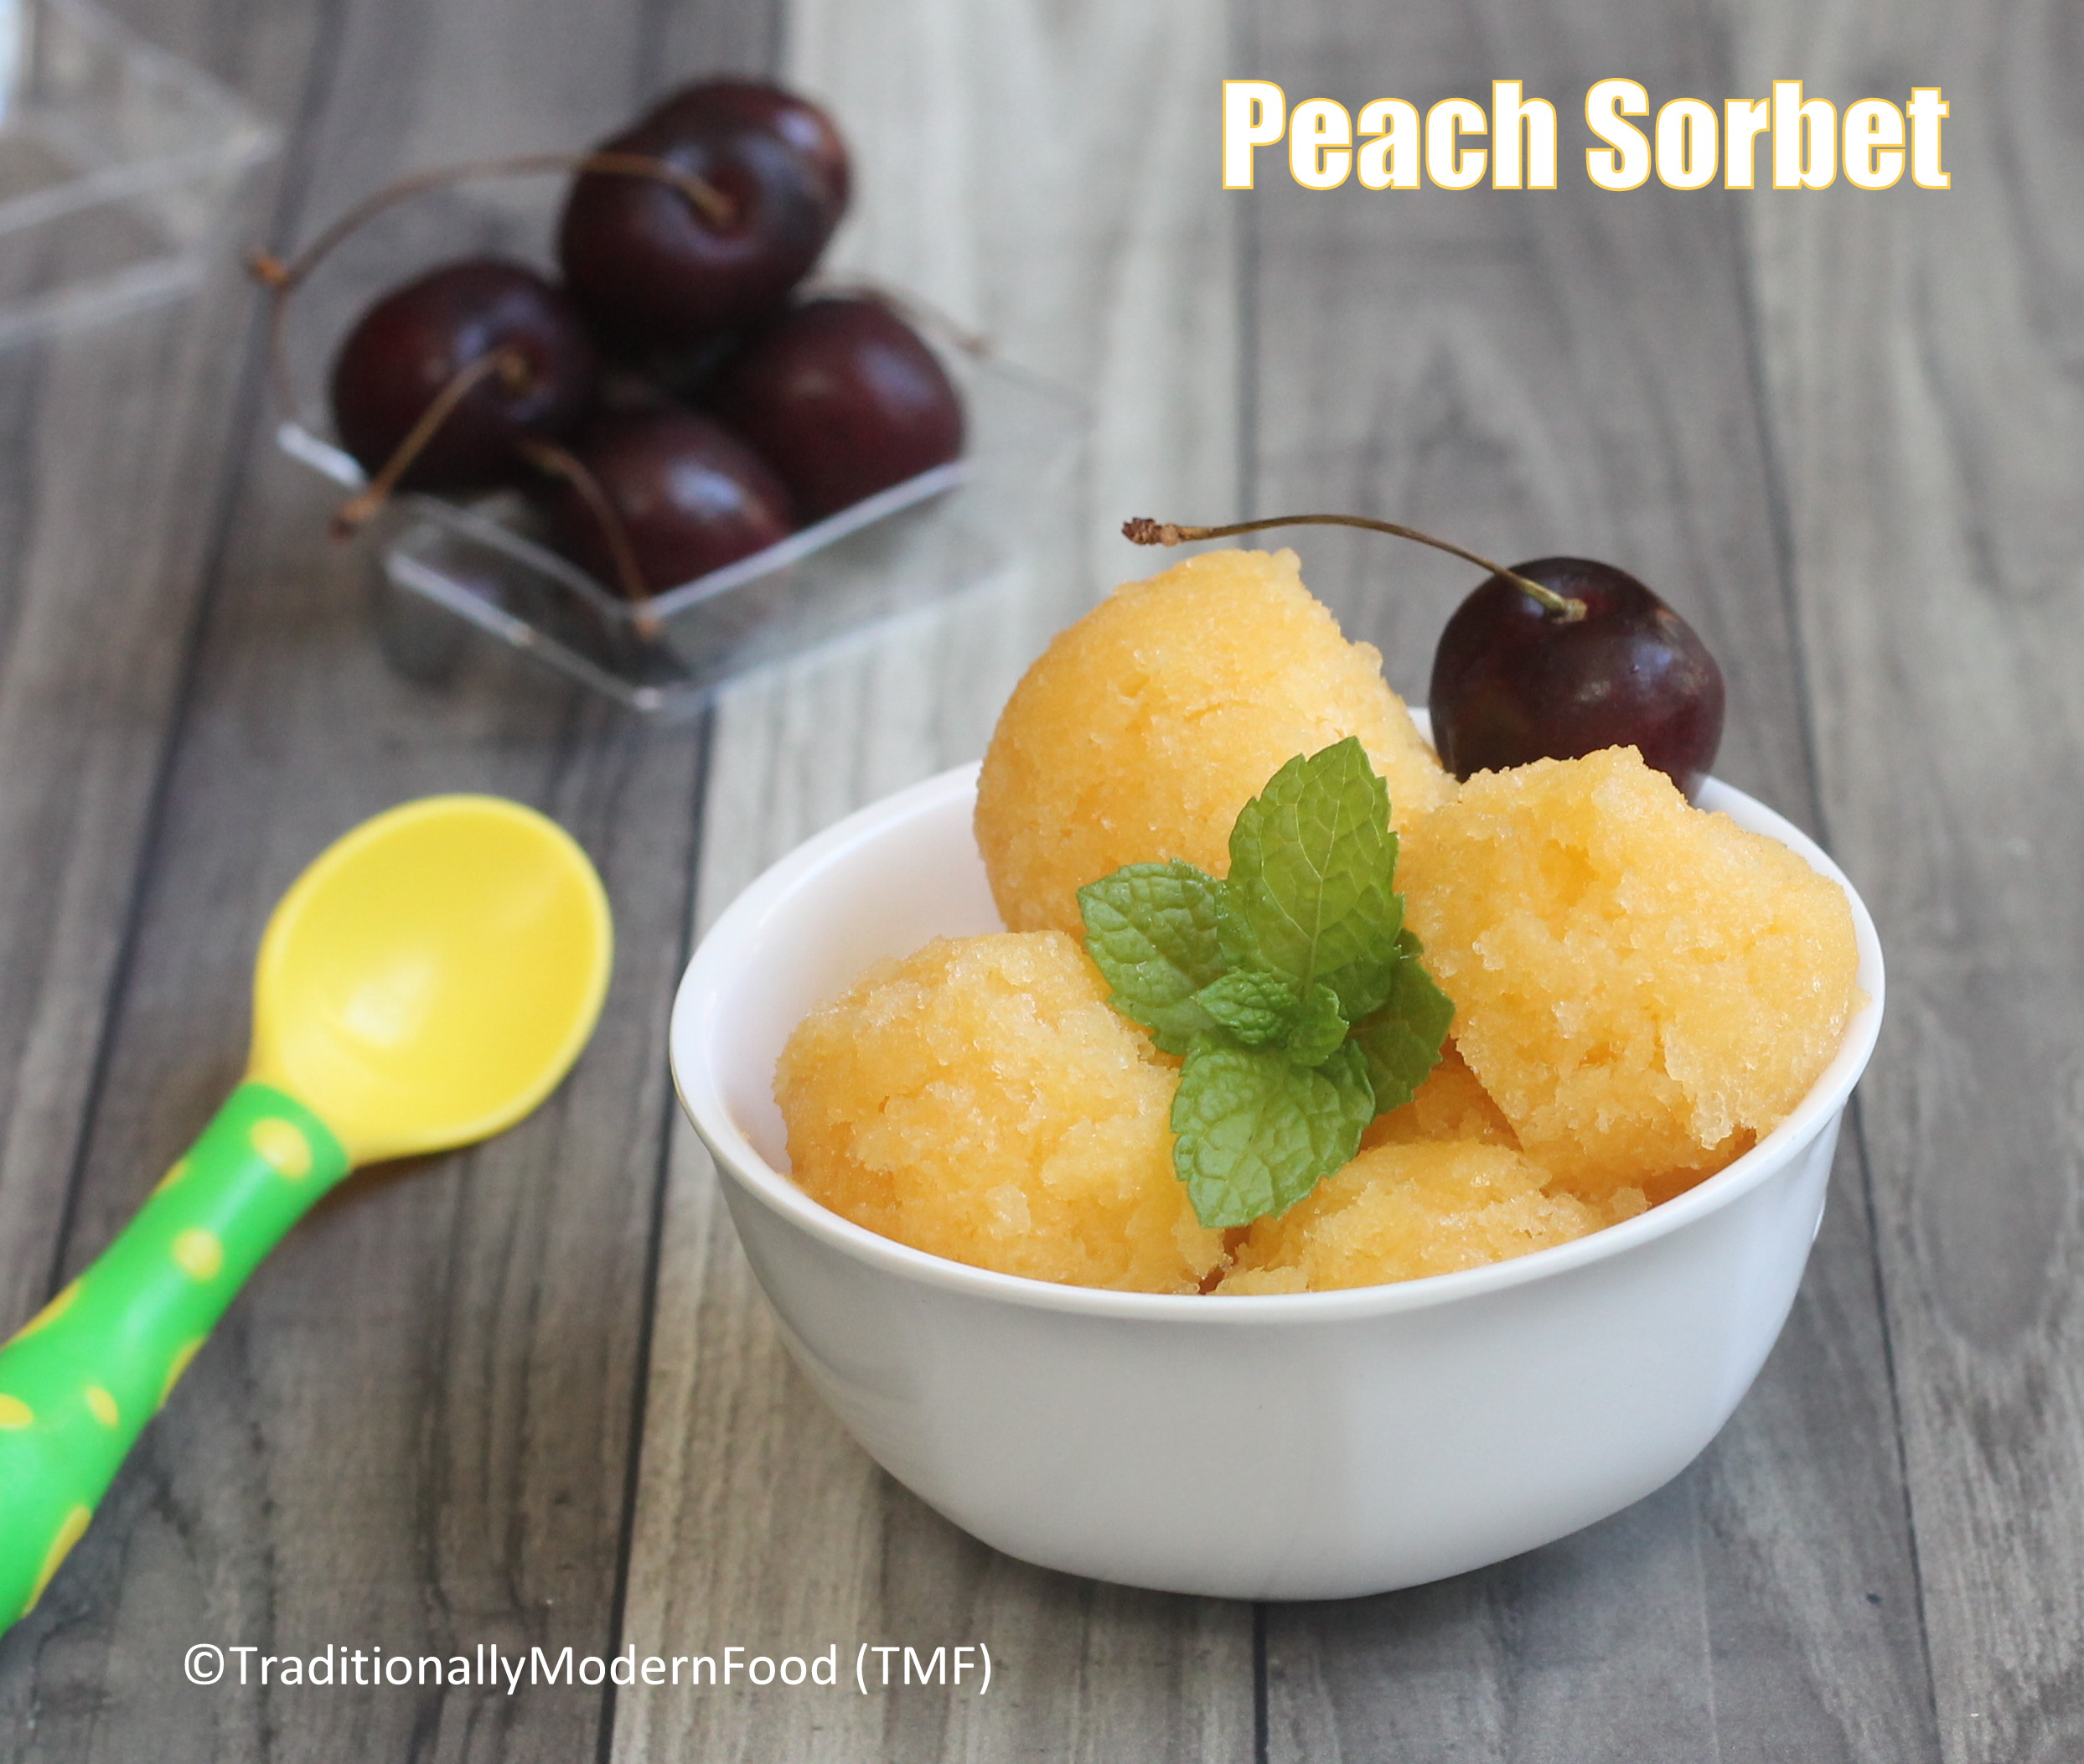 Peach Sorbet Frozen Dessert Traditionally Modern Food,Bearnaise Sauce Knorr